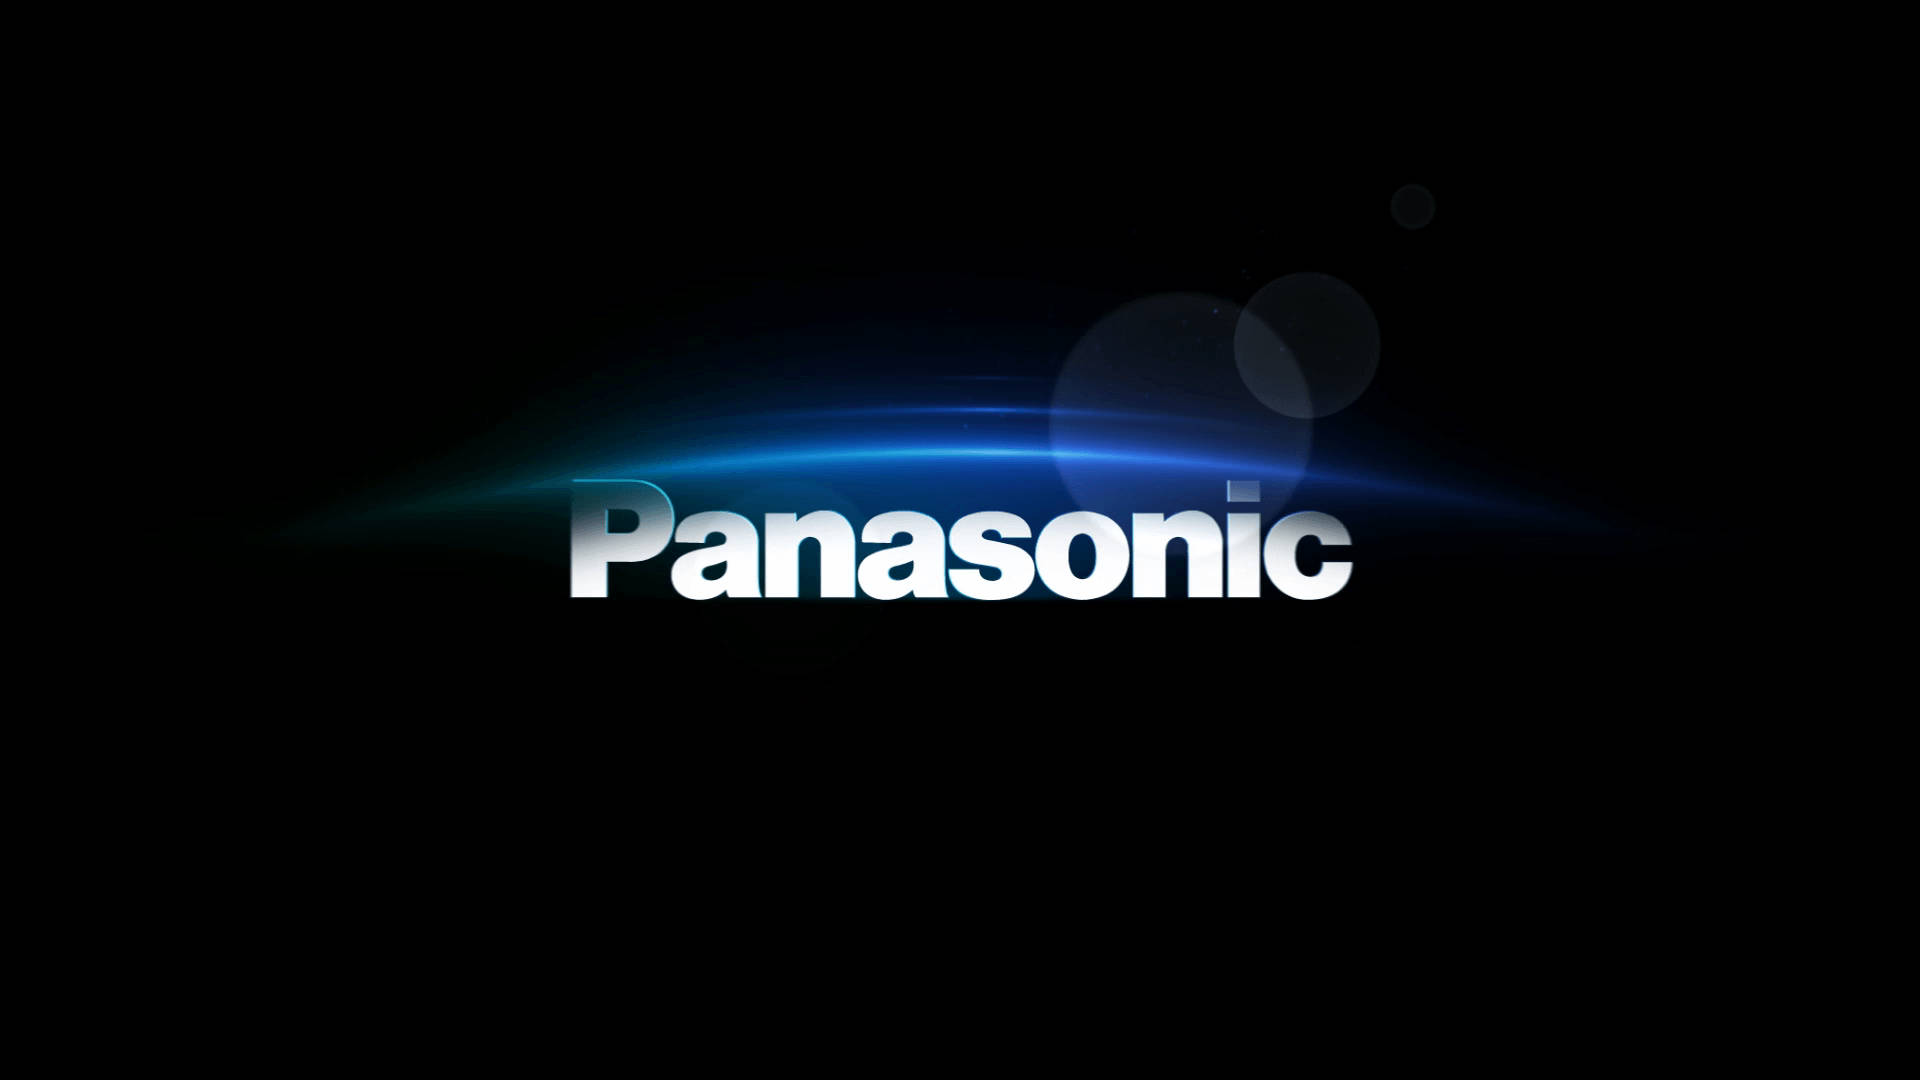 Panasonic Blue And Black Background